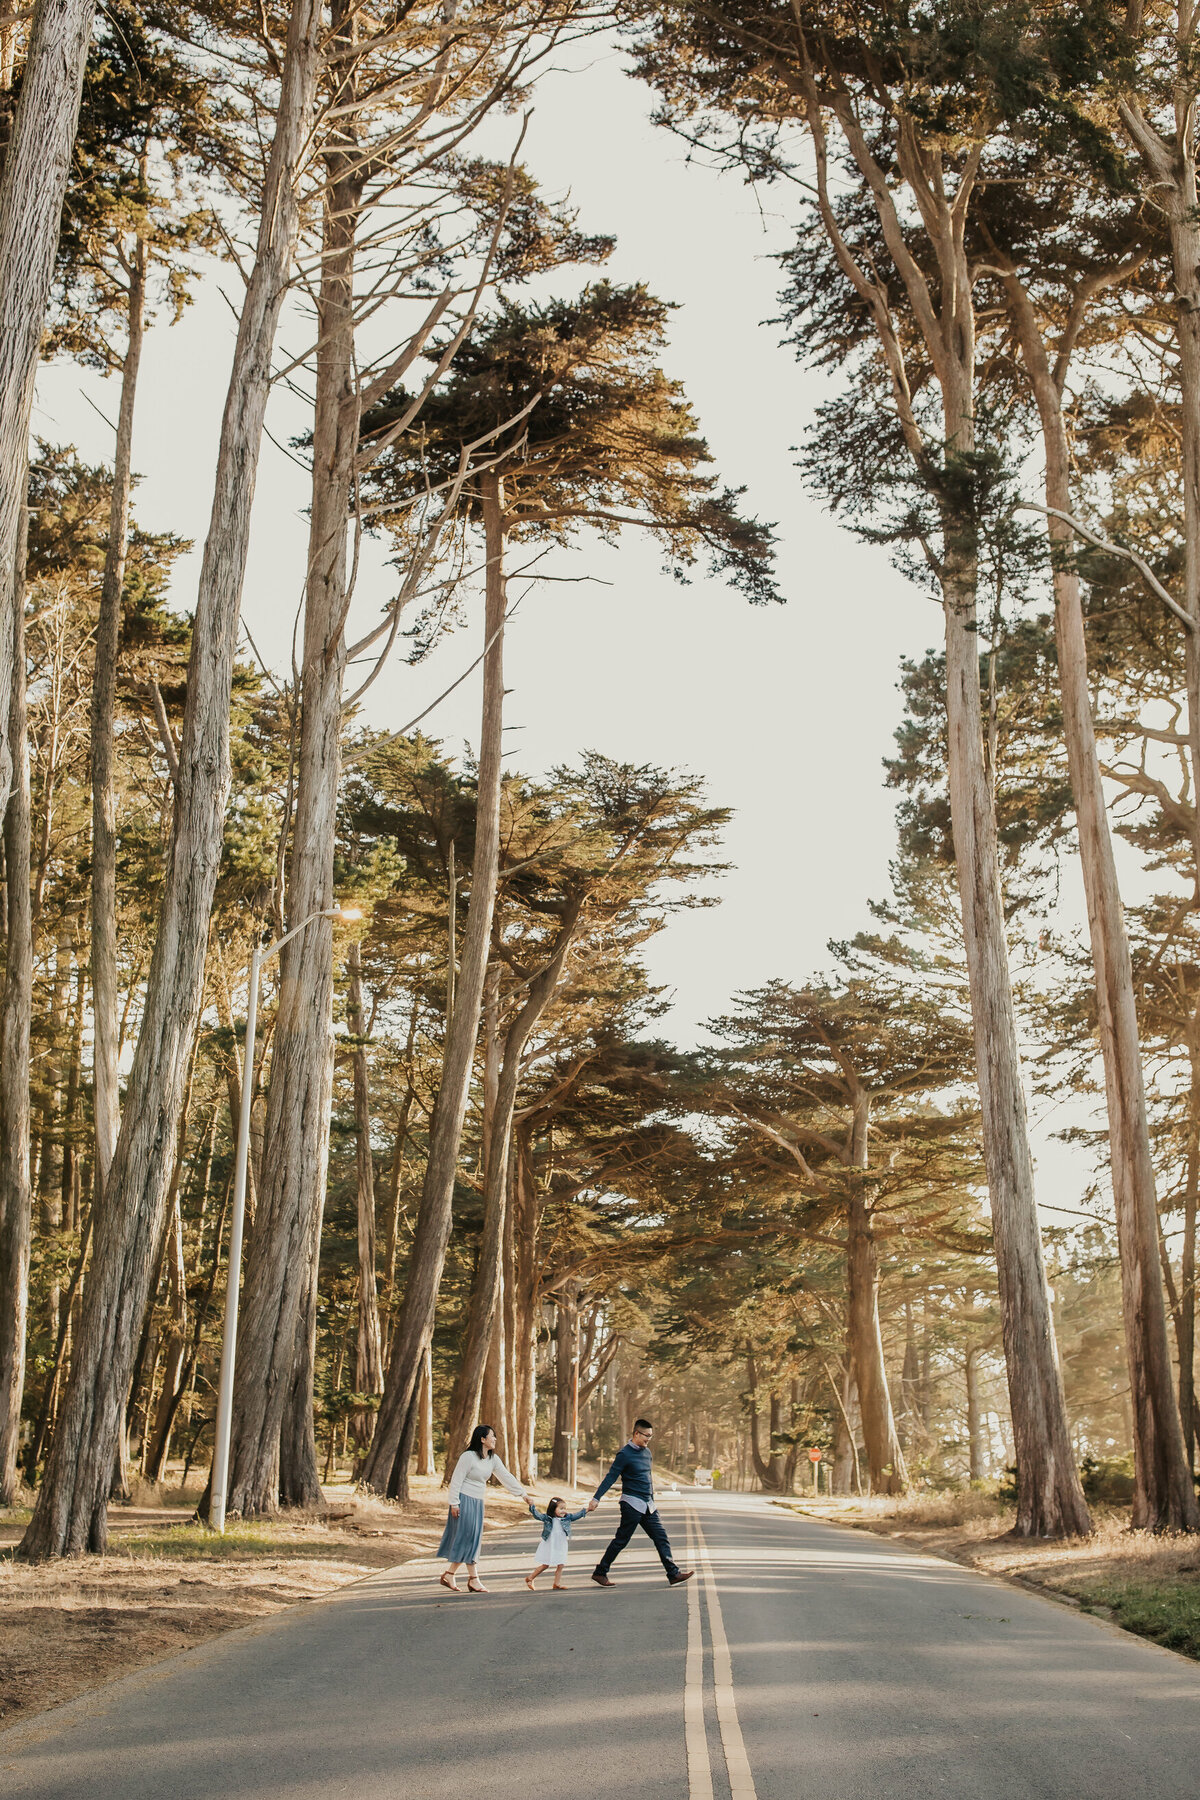 Family walks across tree lined street holding hands in San Francisco Presido